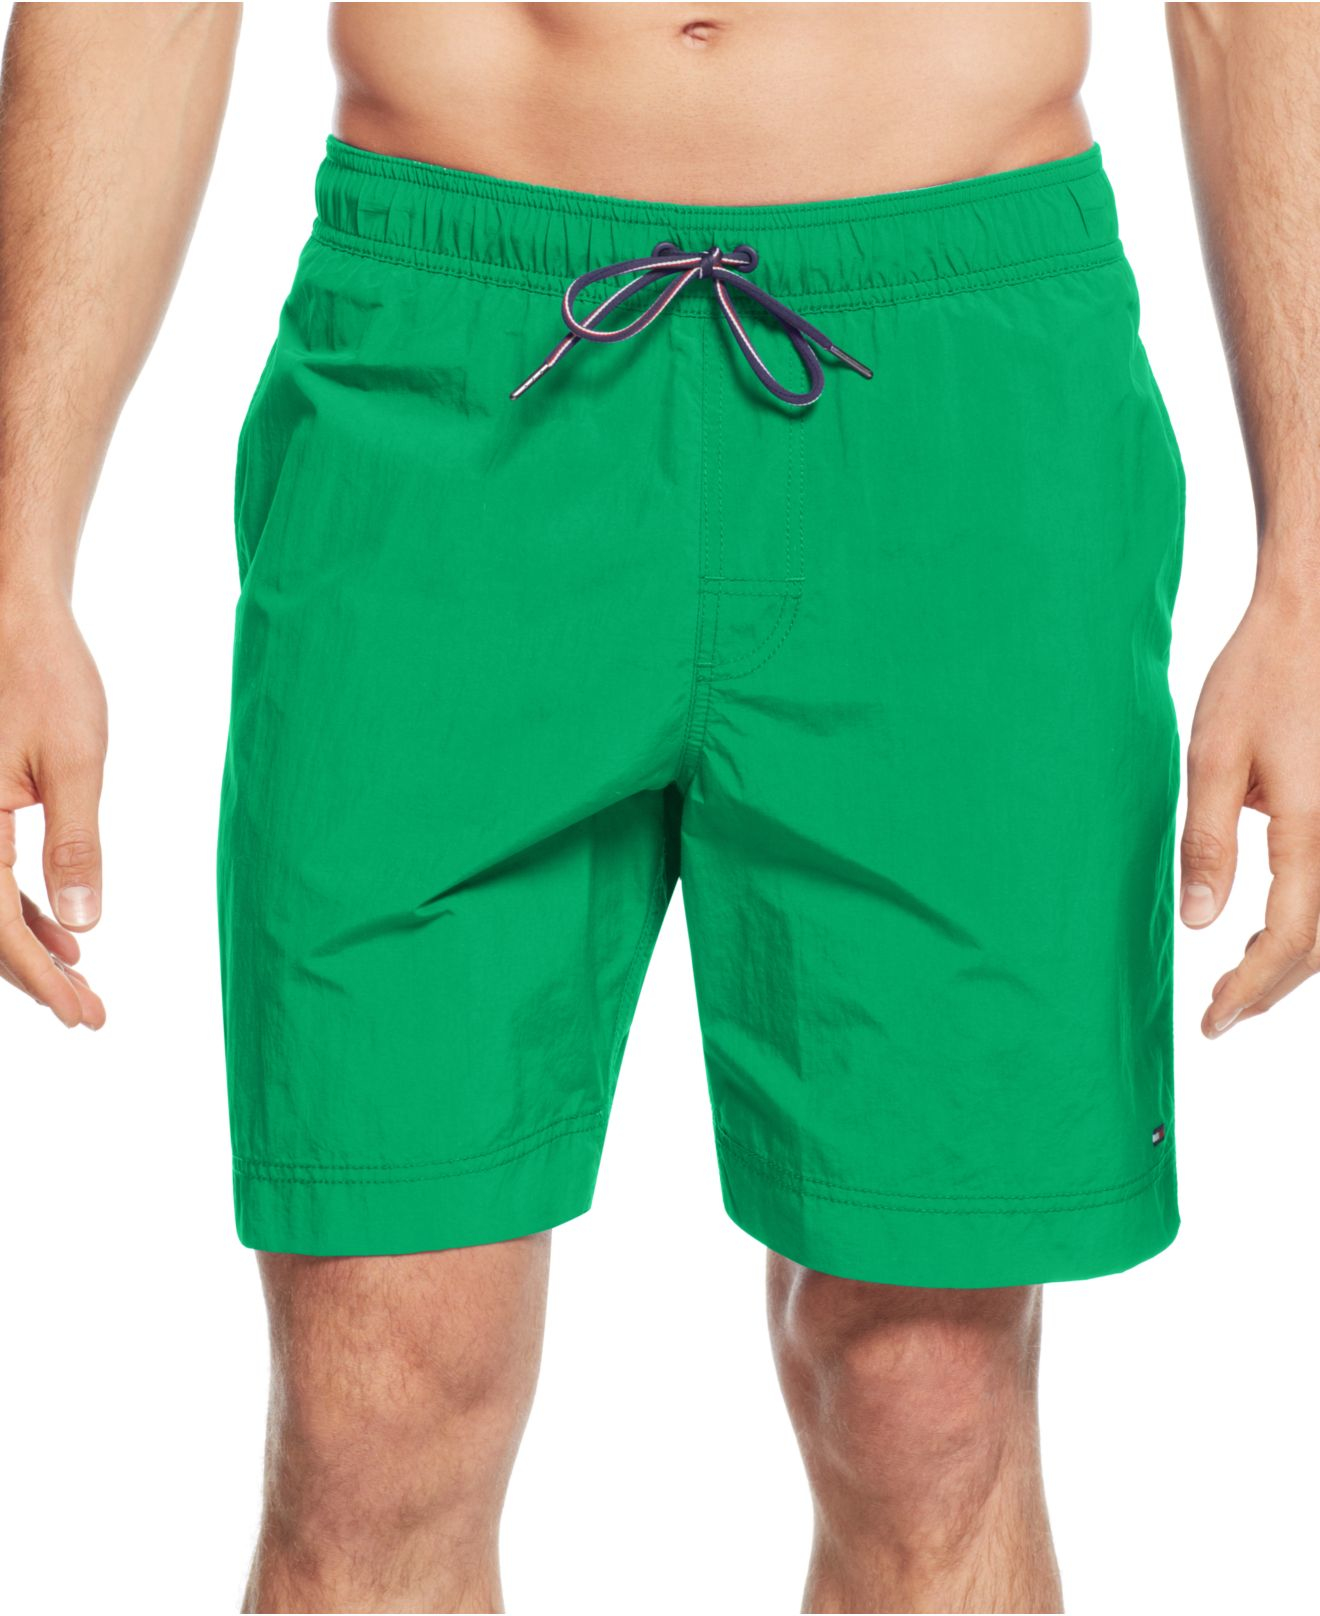 Lyst - Tommy Hilfiger Men's Tommy Swim Trunks in Green for Men